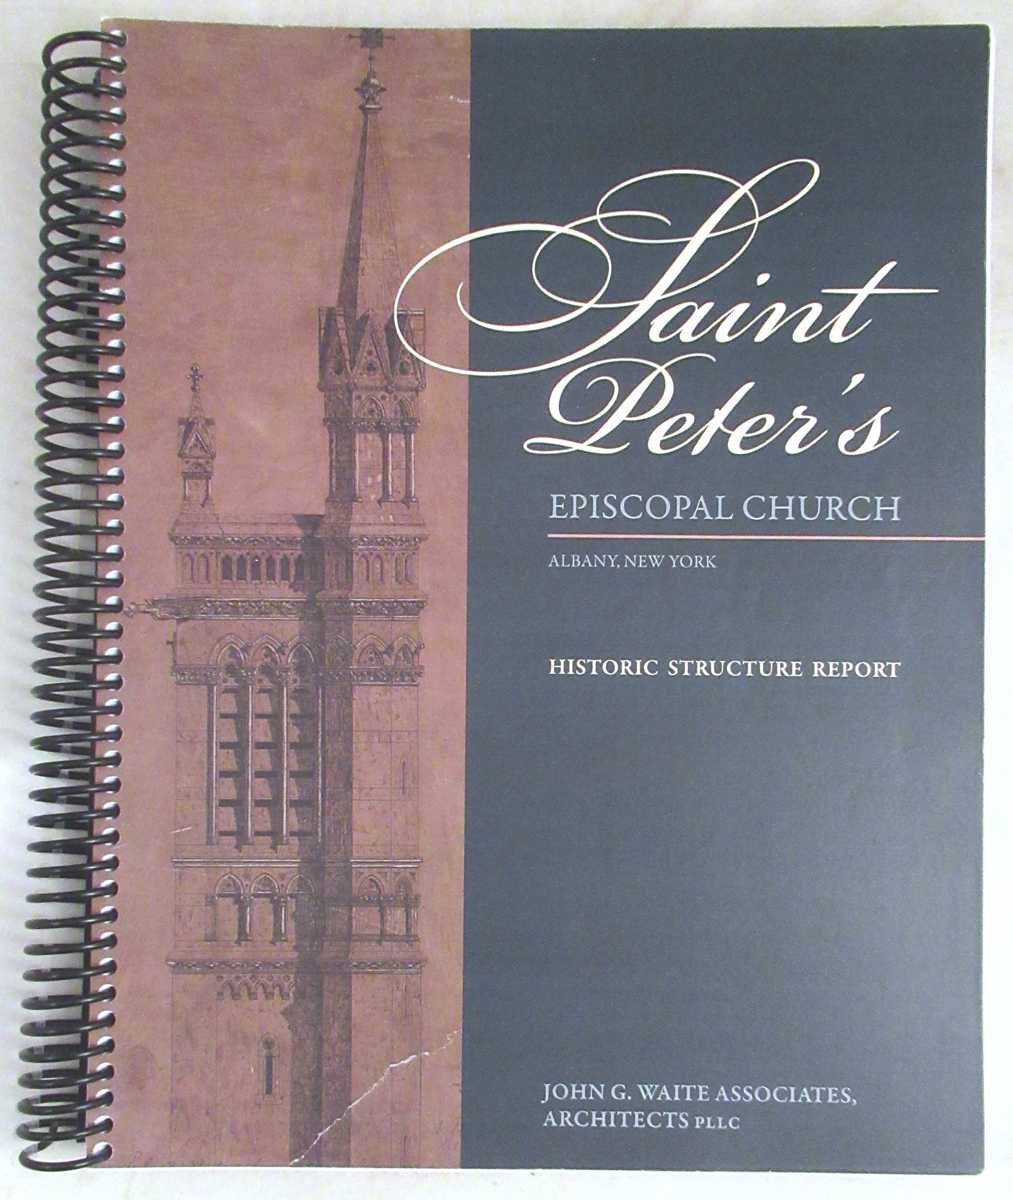 John G. Waite Associates, Architects - St. Peter's Episcopal Church Albany, New York, Historic Structure Report